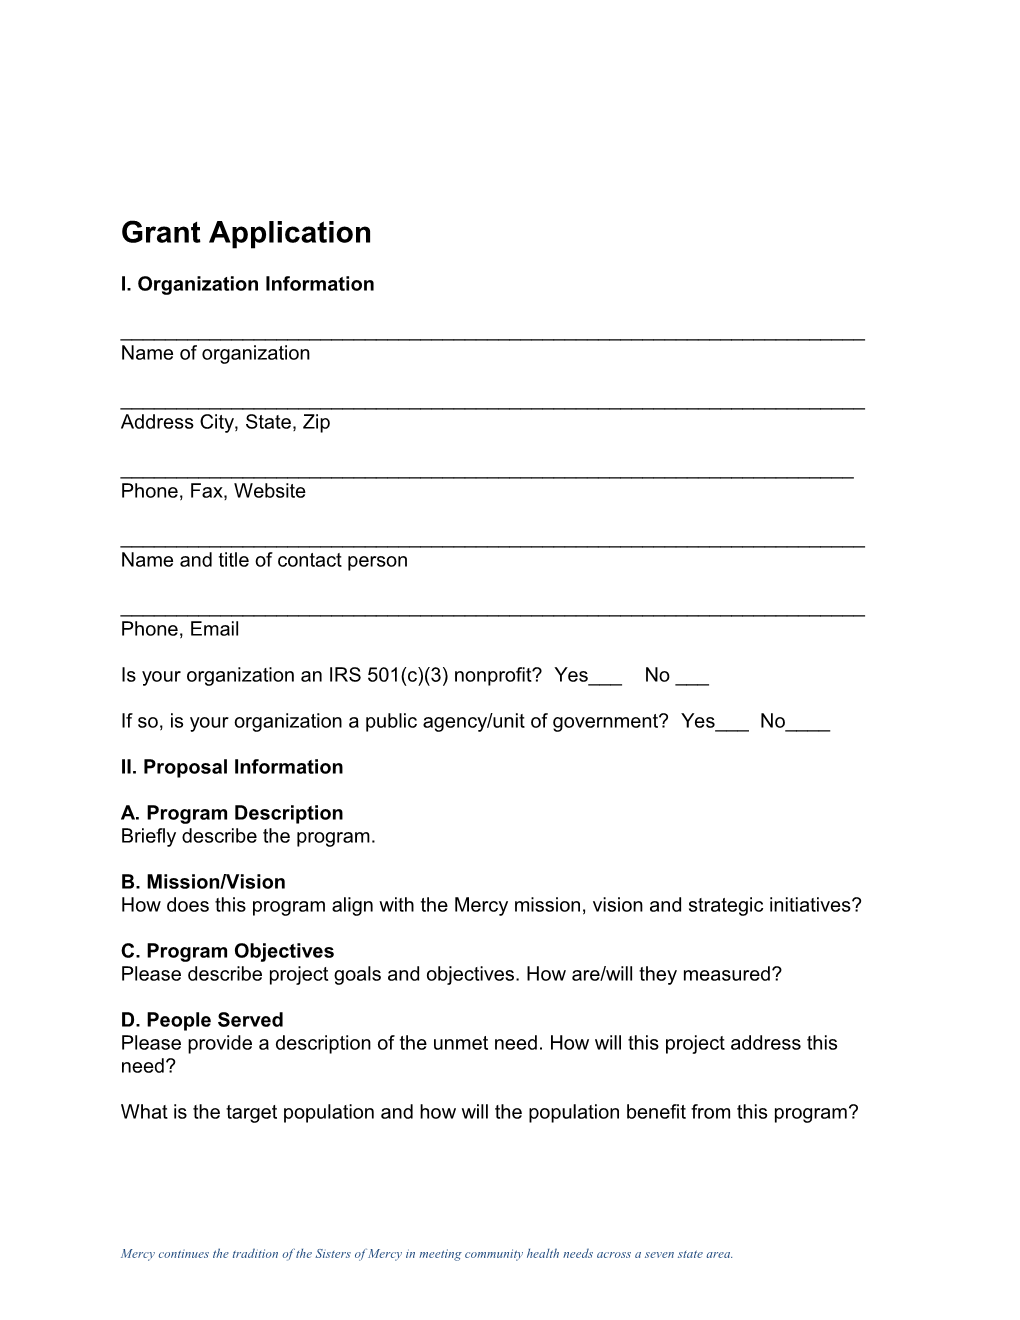 Grant Application s1